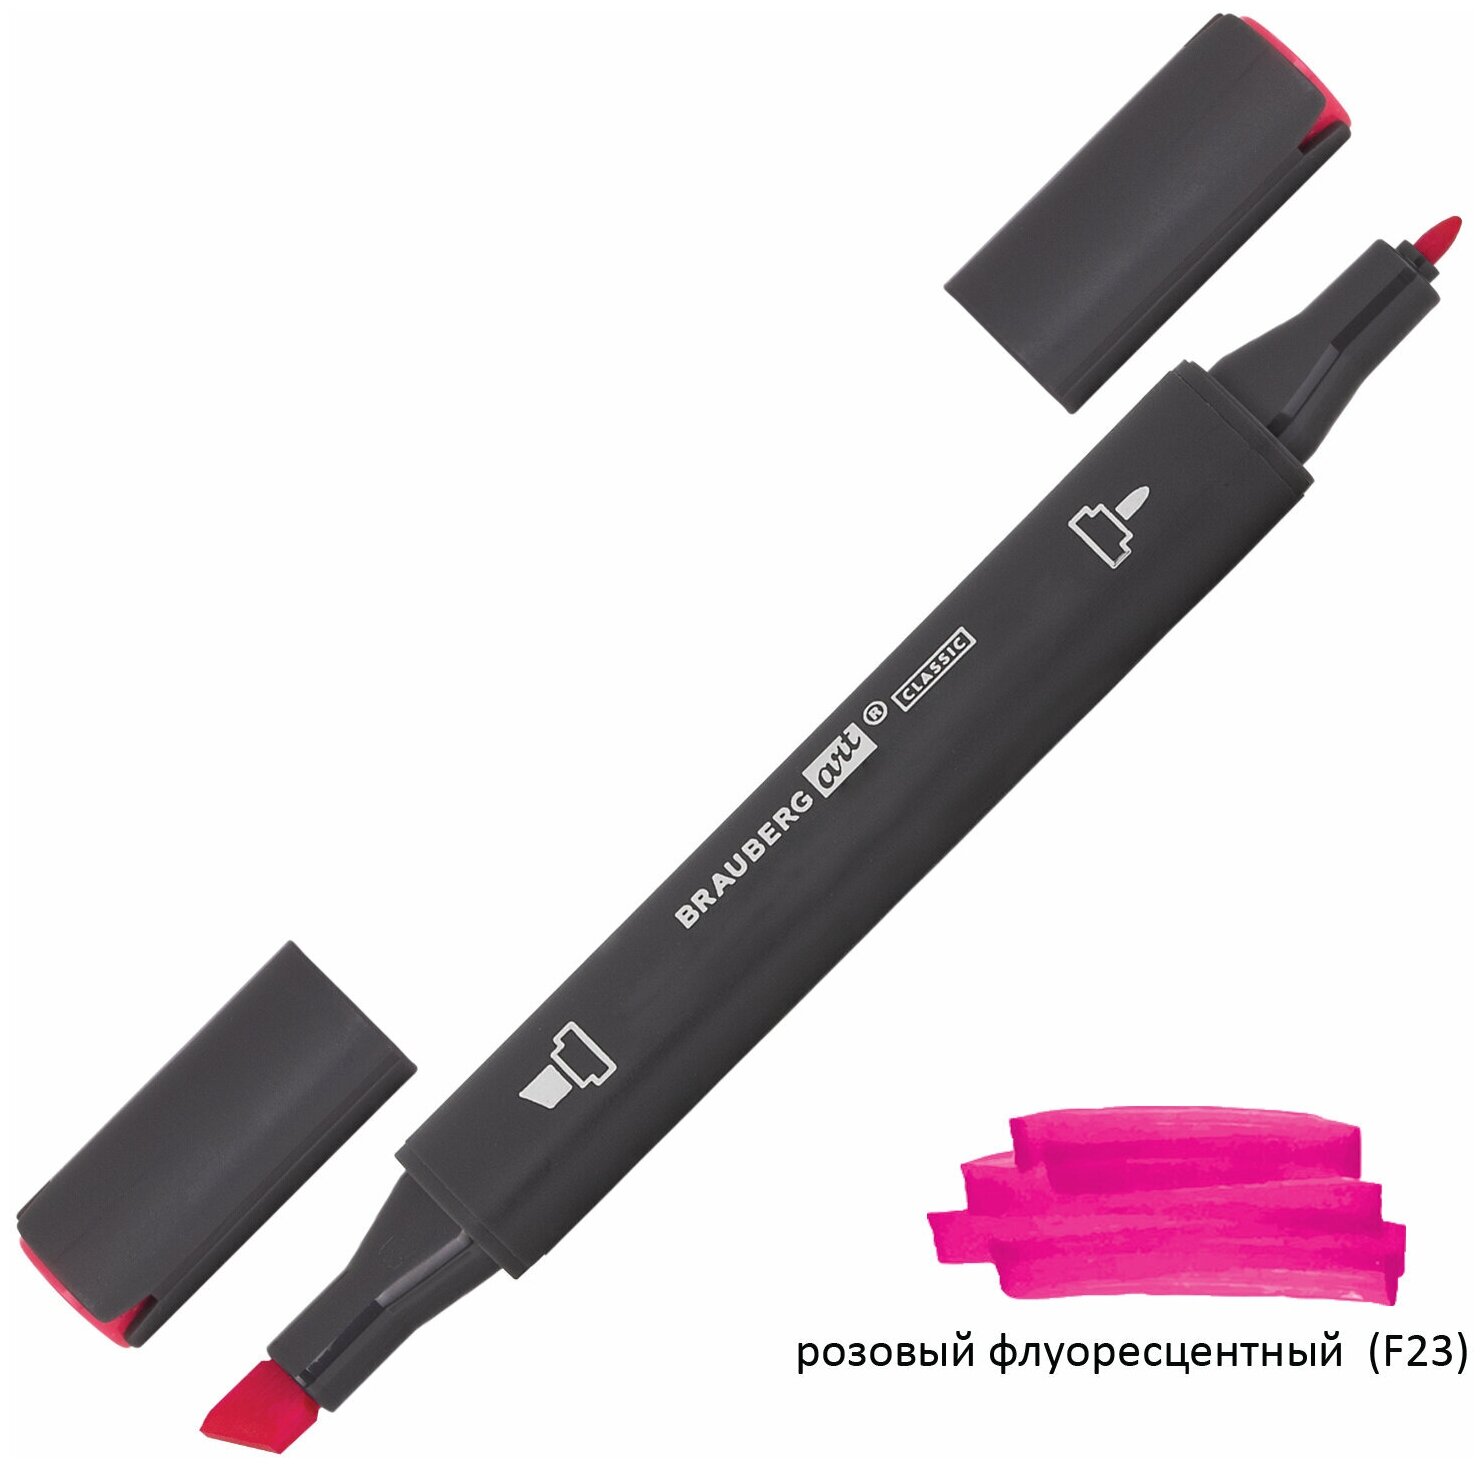 Маркер для скетчинга двусторонний 1 мм - 6 мм BRAUBERG ART CLASSIC, розовый флуоресцентный (F23), 151782 Комплект - 6 шт.